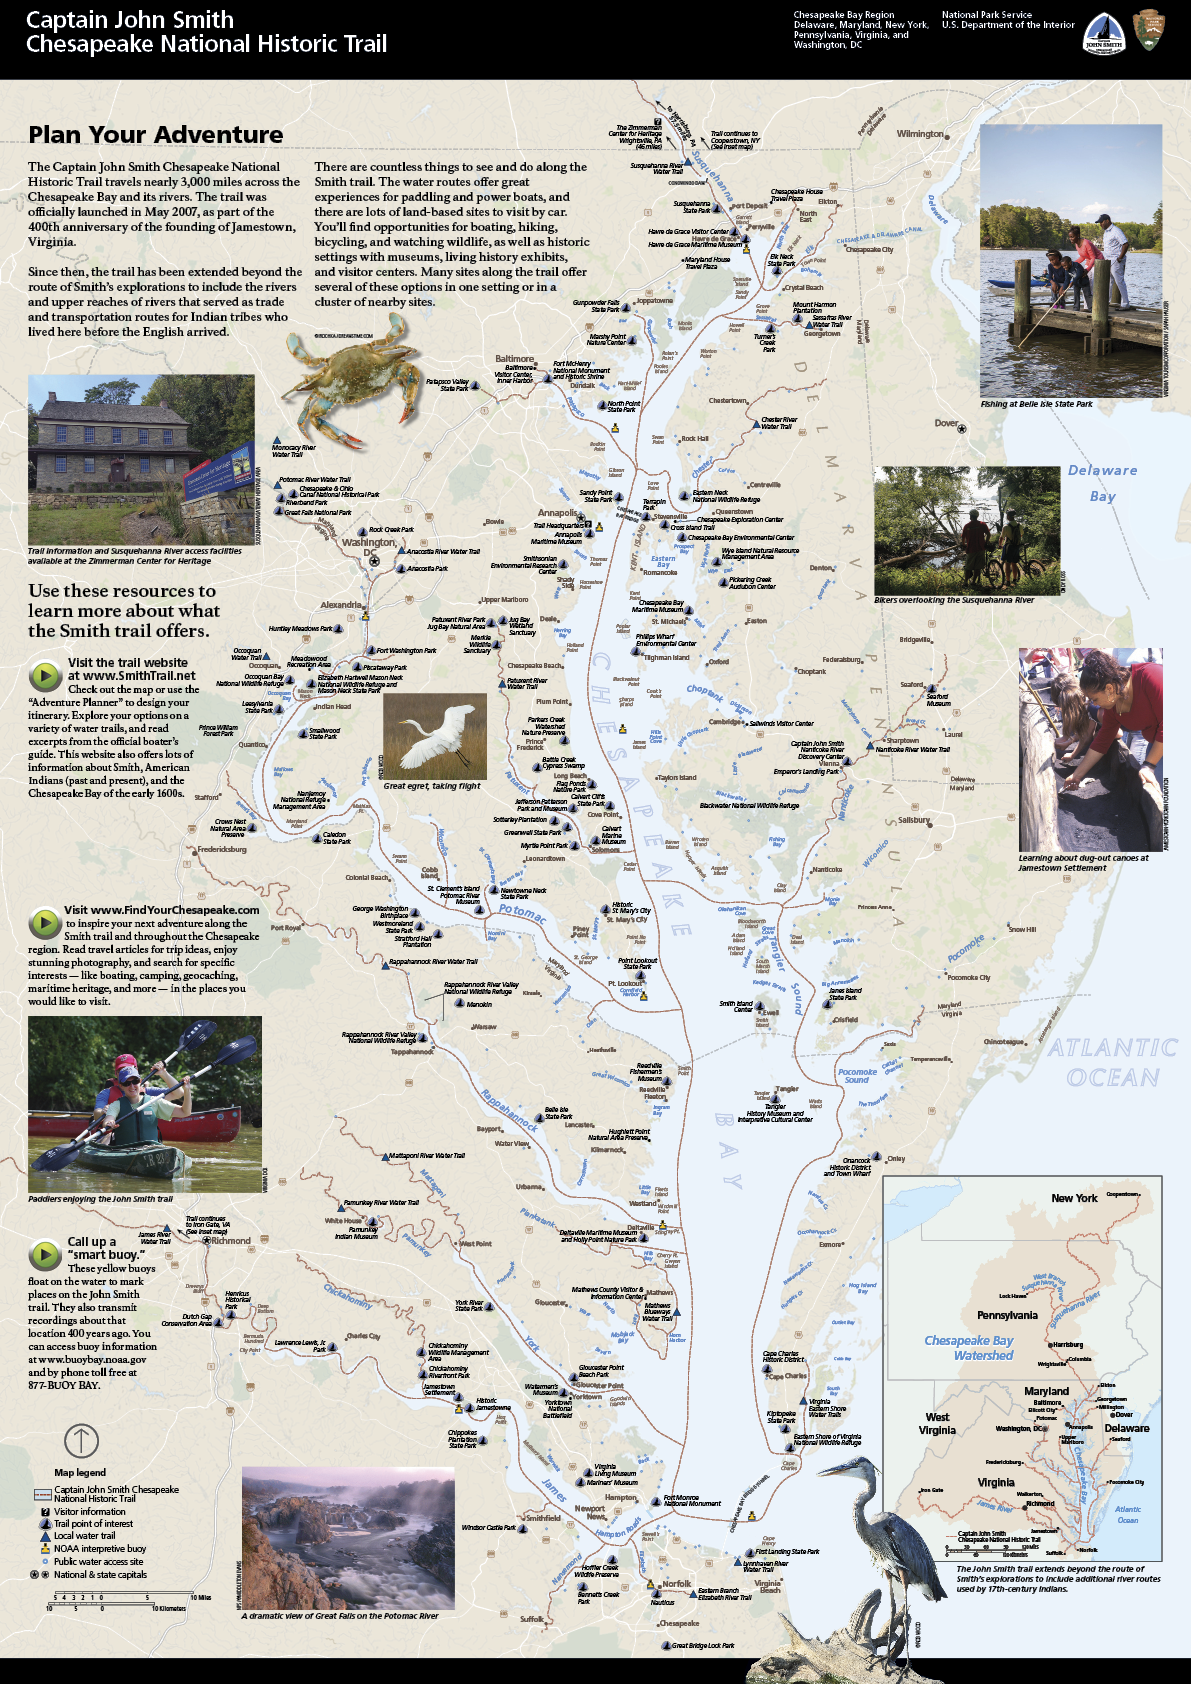 The Captain John Smith Chesapeake National Historic Trail/NPS